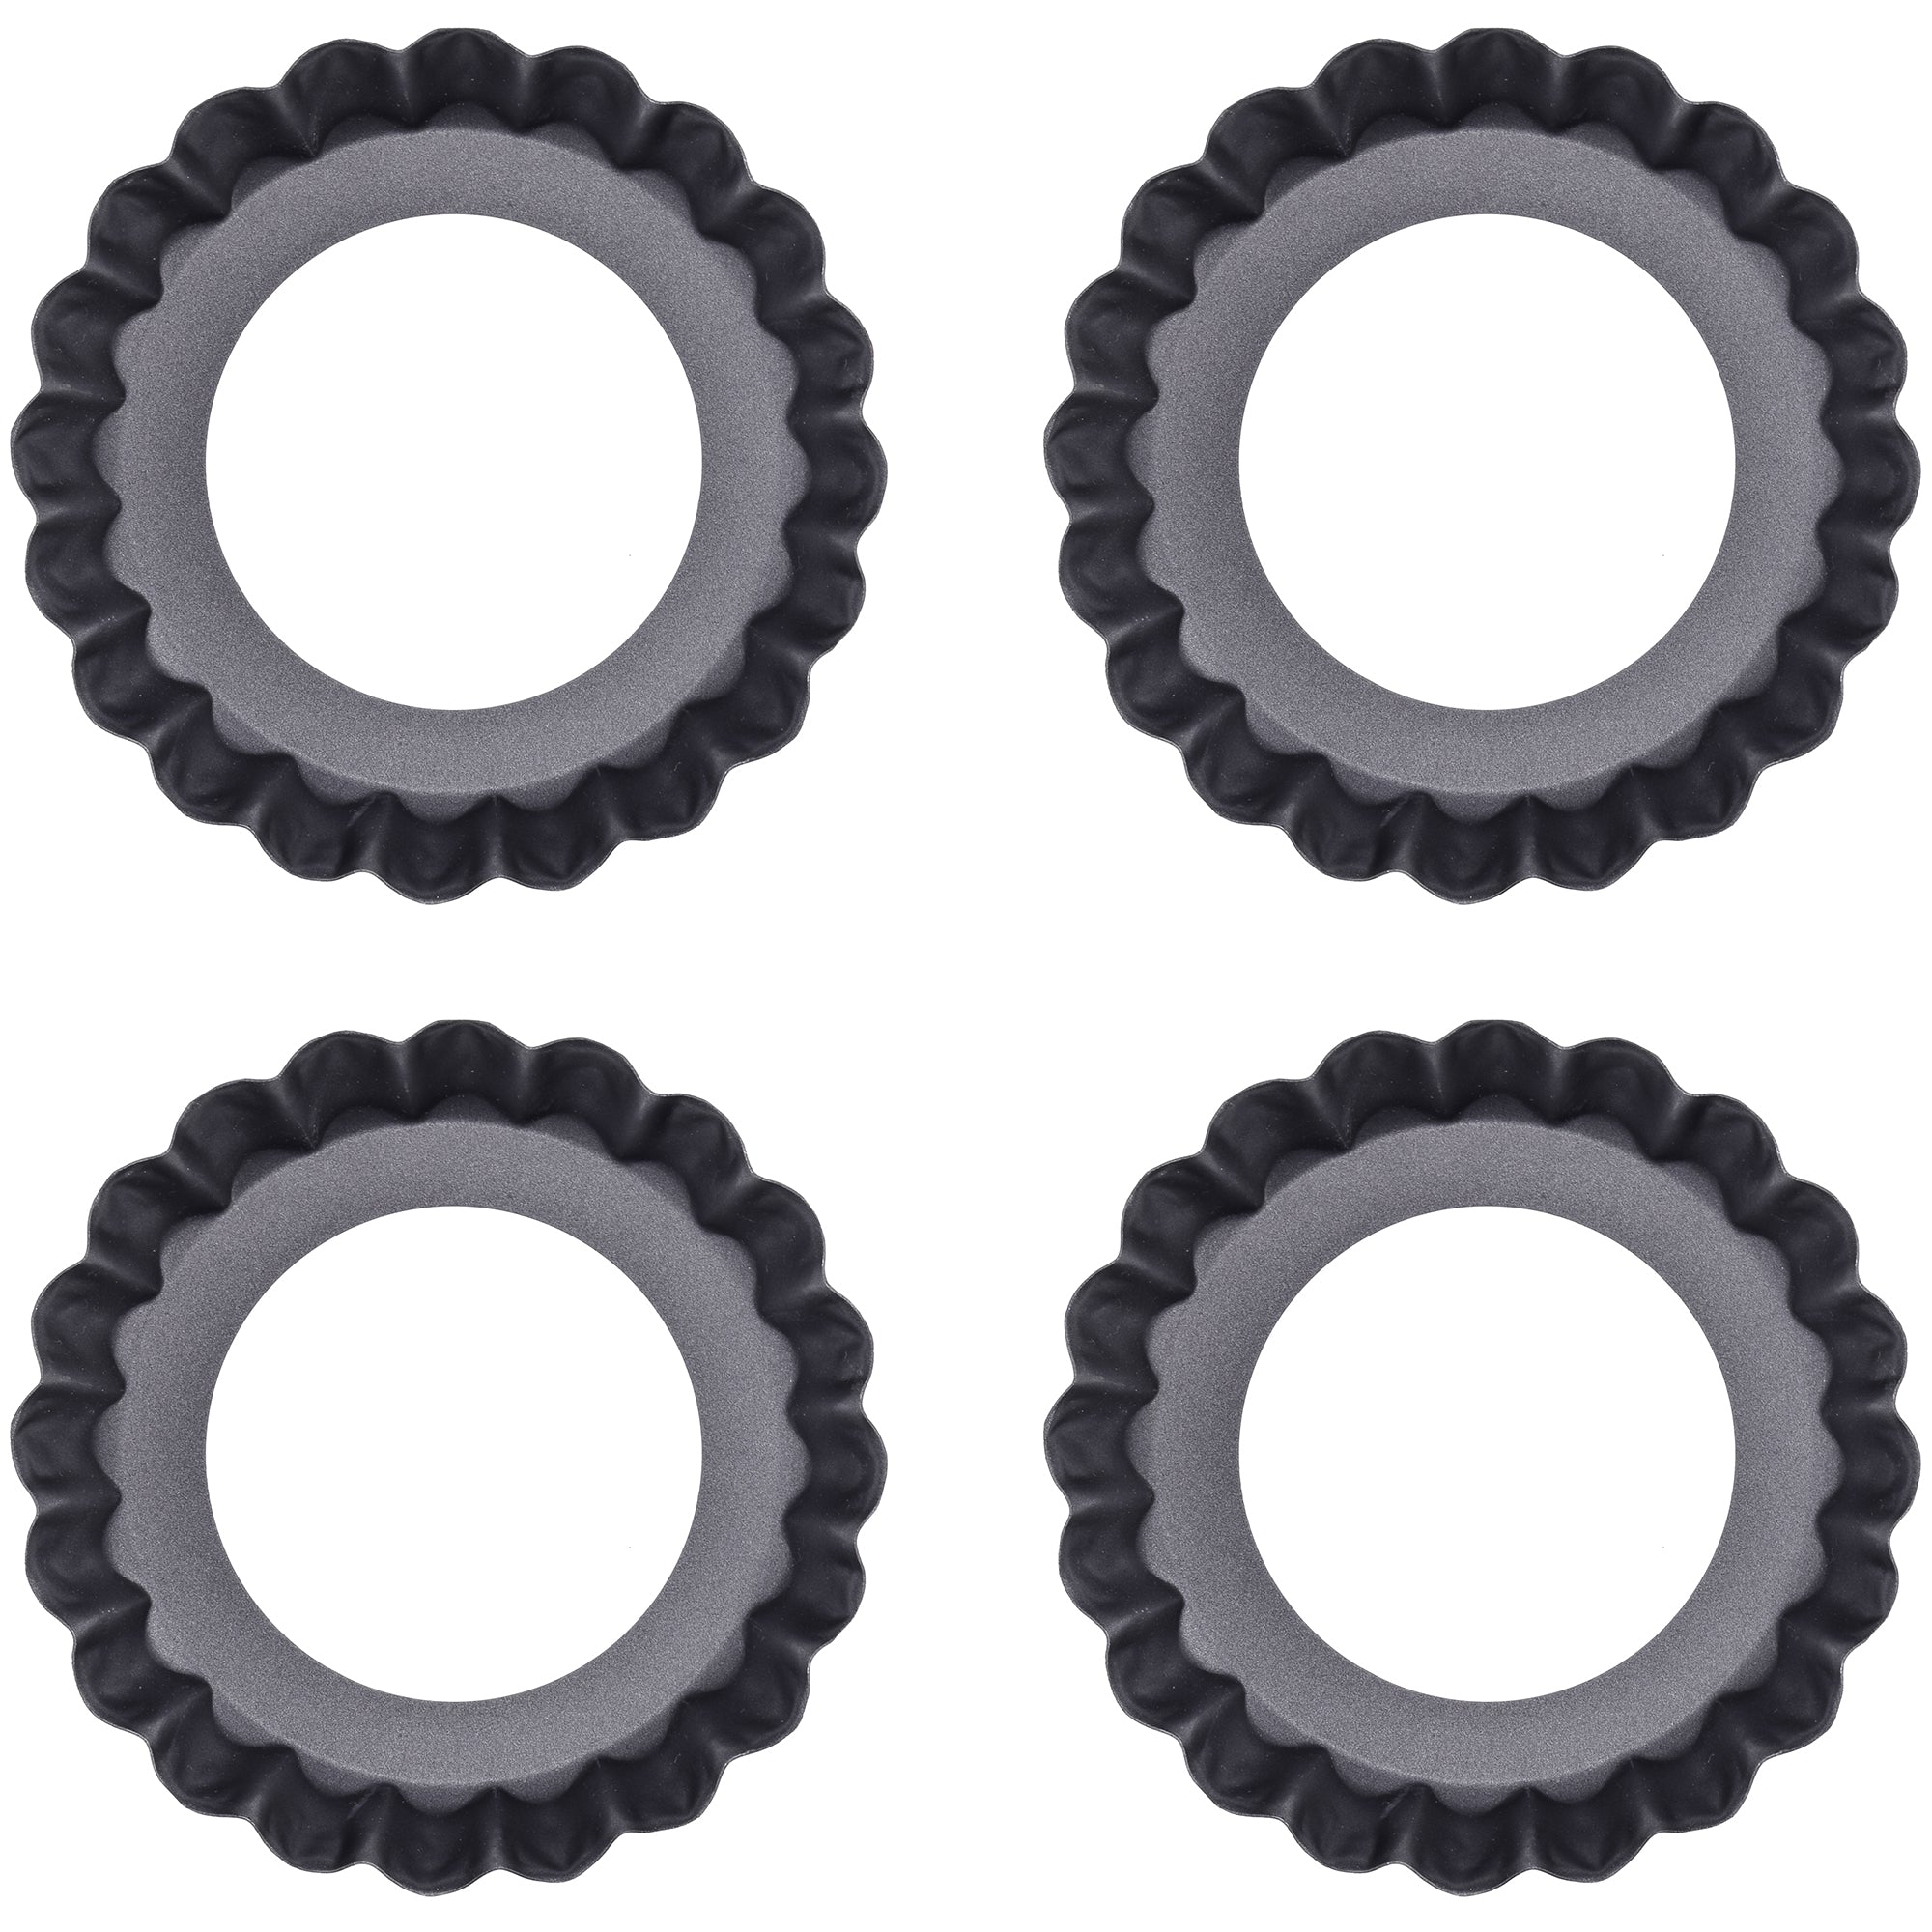 Set of 4, 4-Inch Carbon Steel Tart Pans